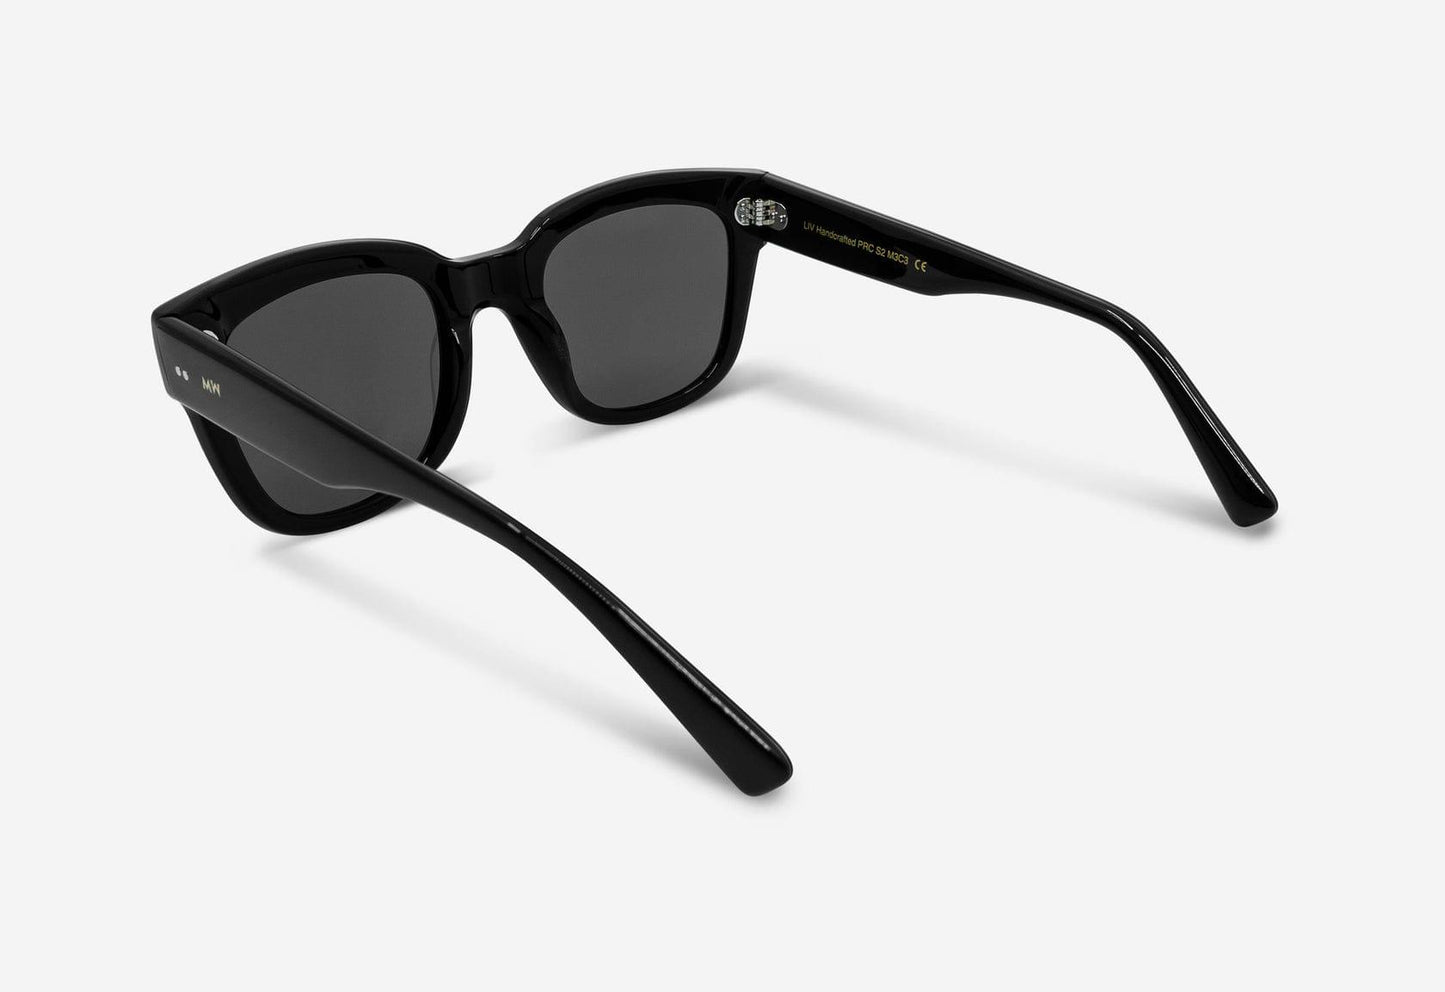 LIV, Square sunglasses for men and women grey lens UV400 protection